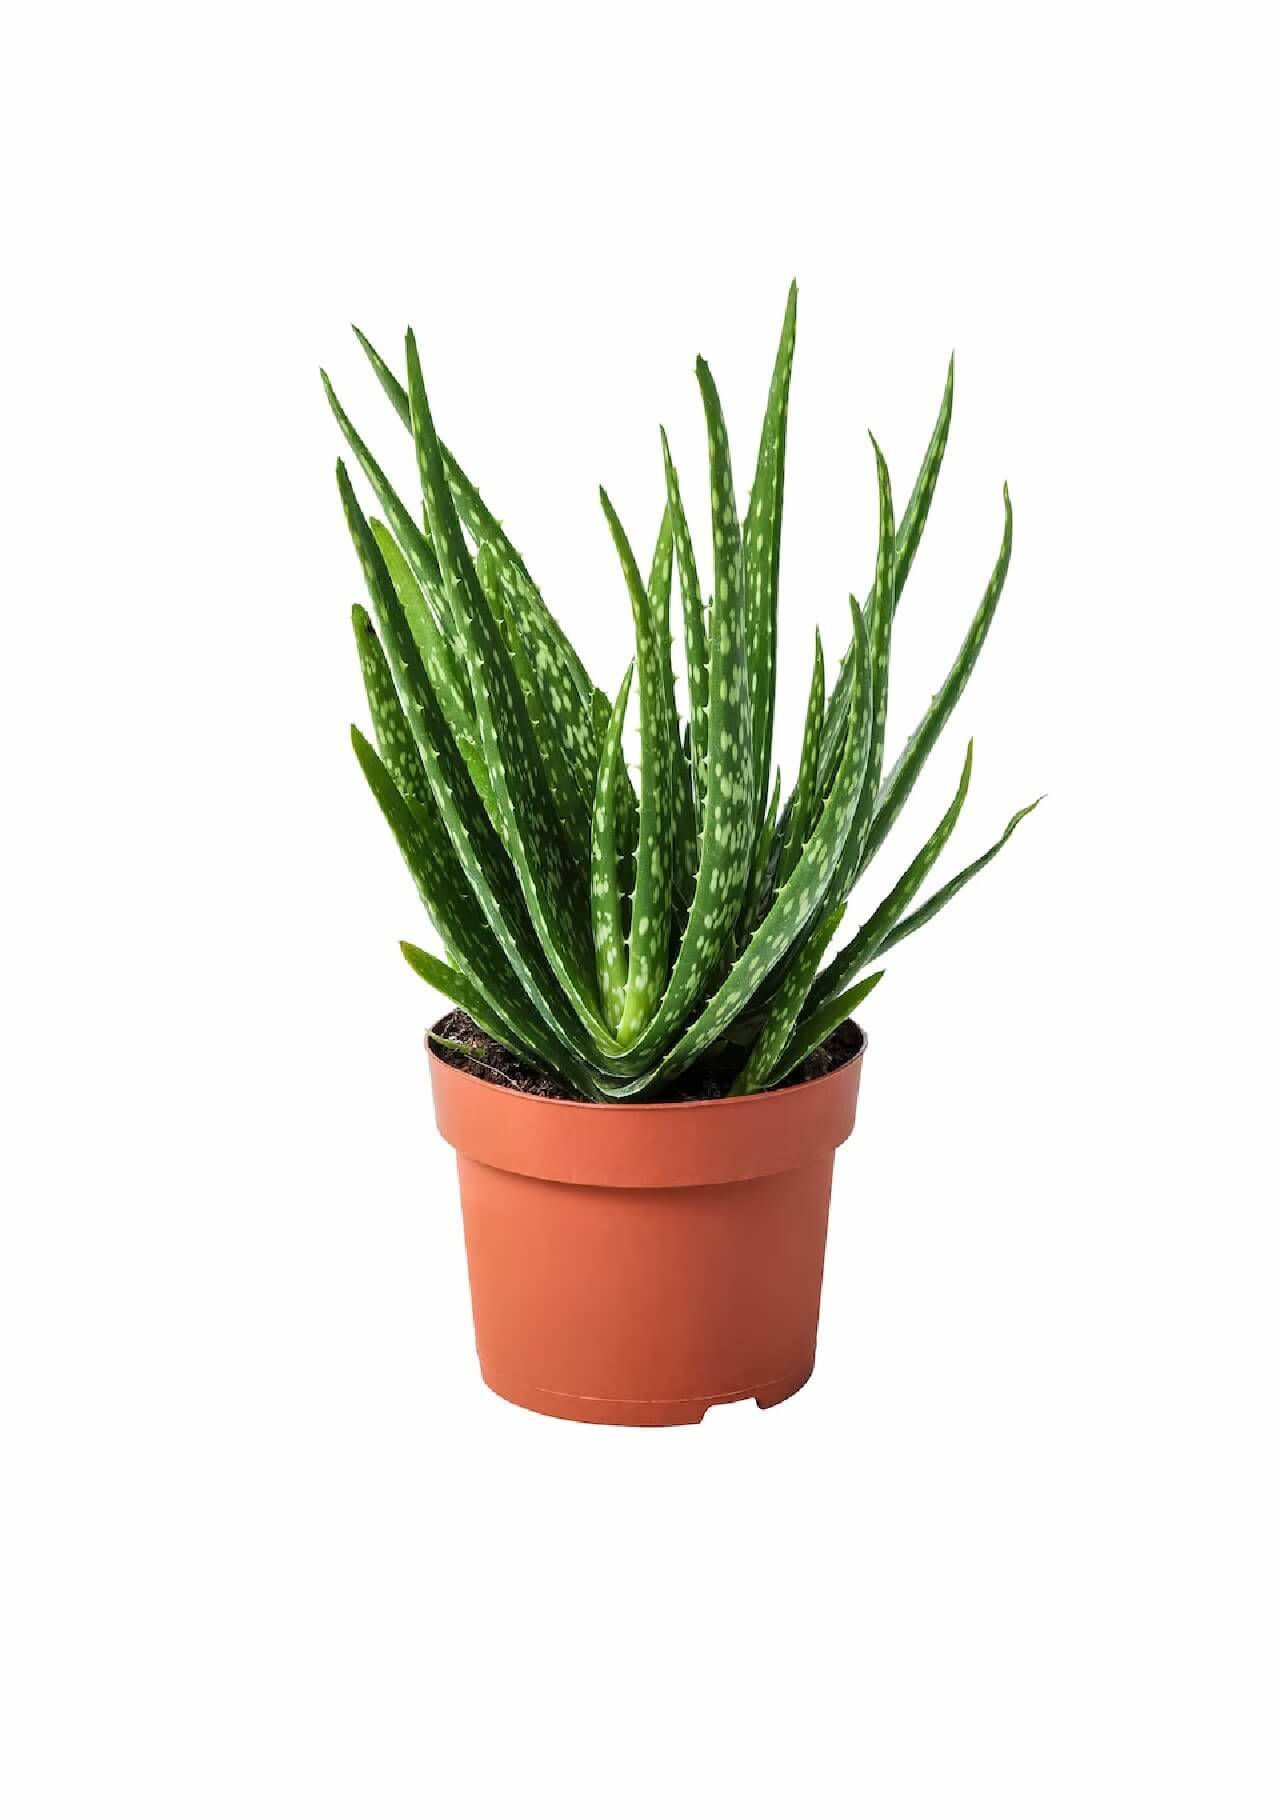 Plantas de Ikea Aloe vera